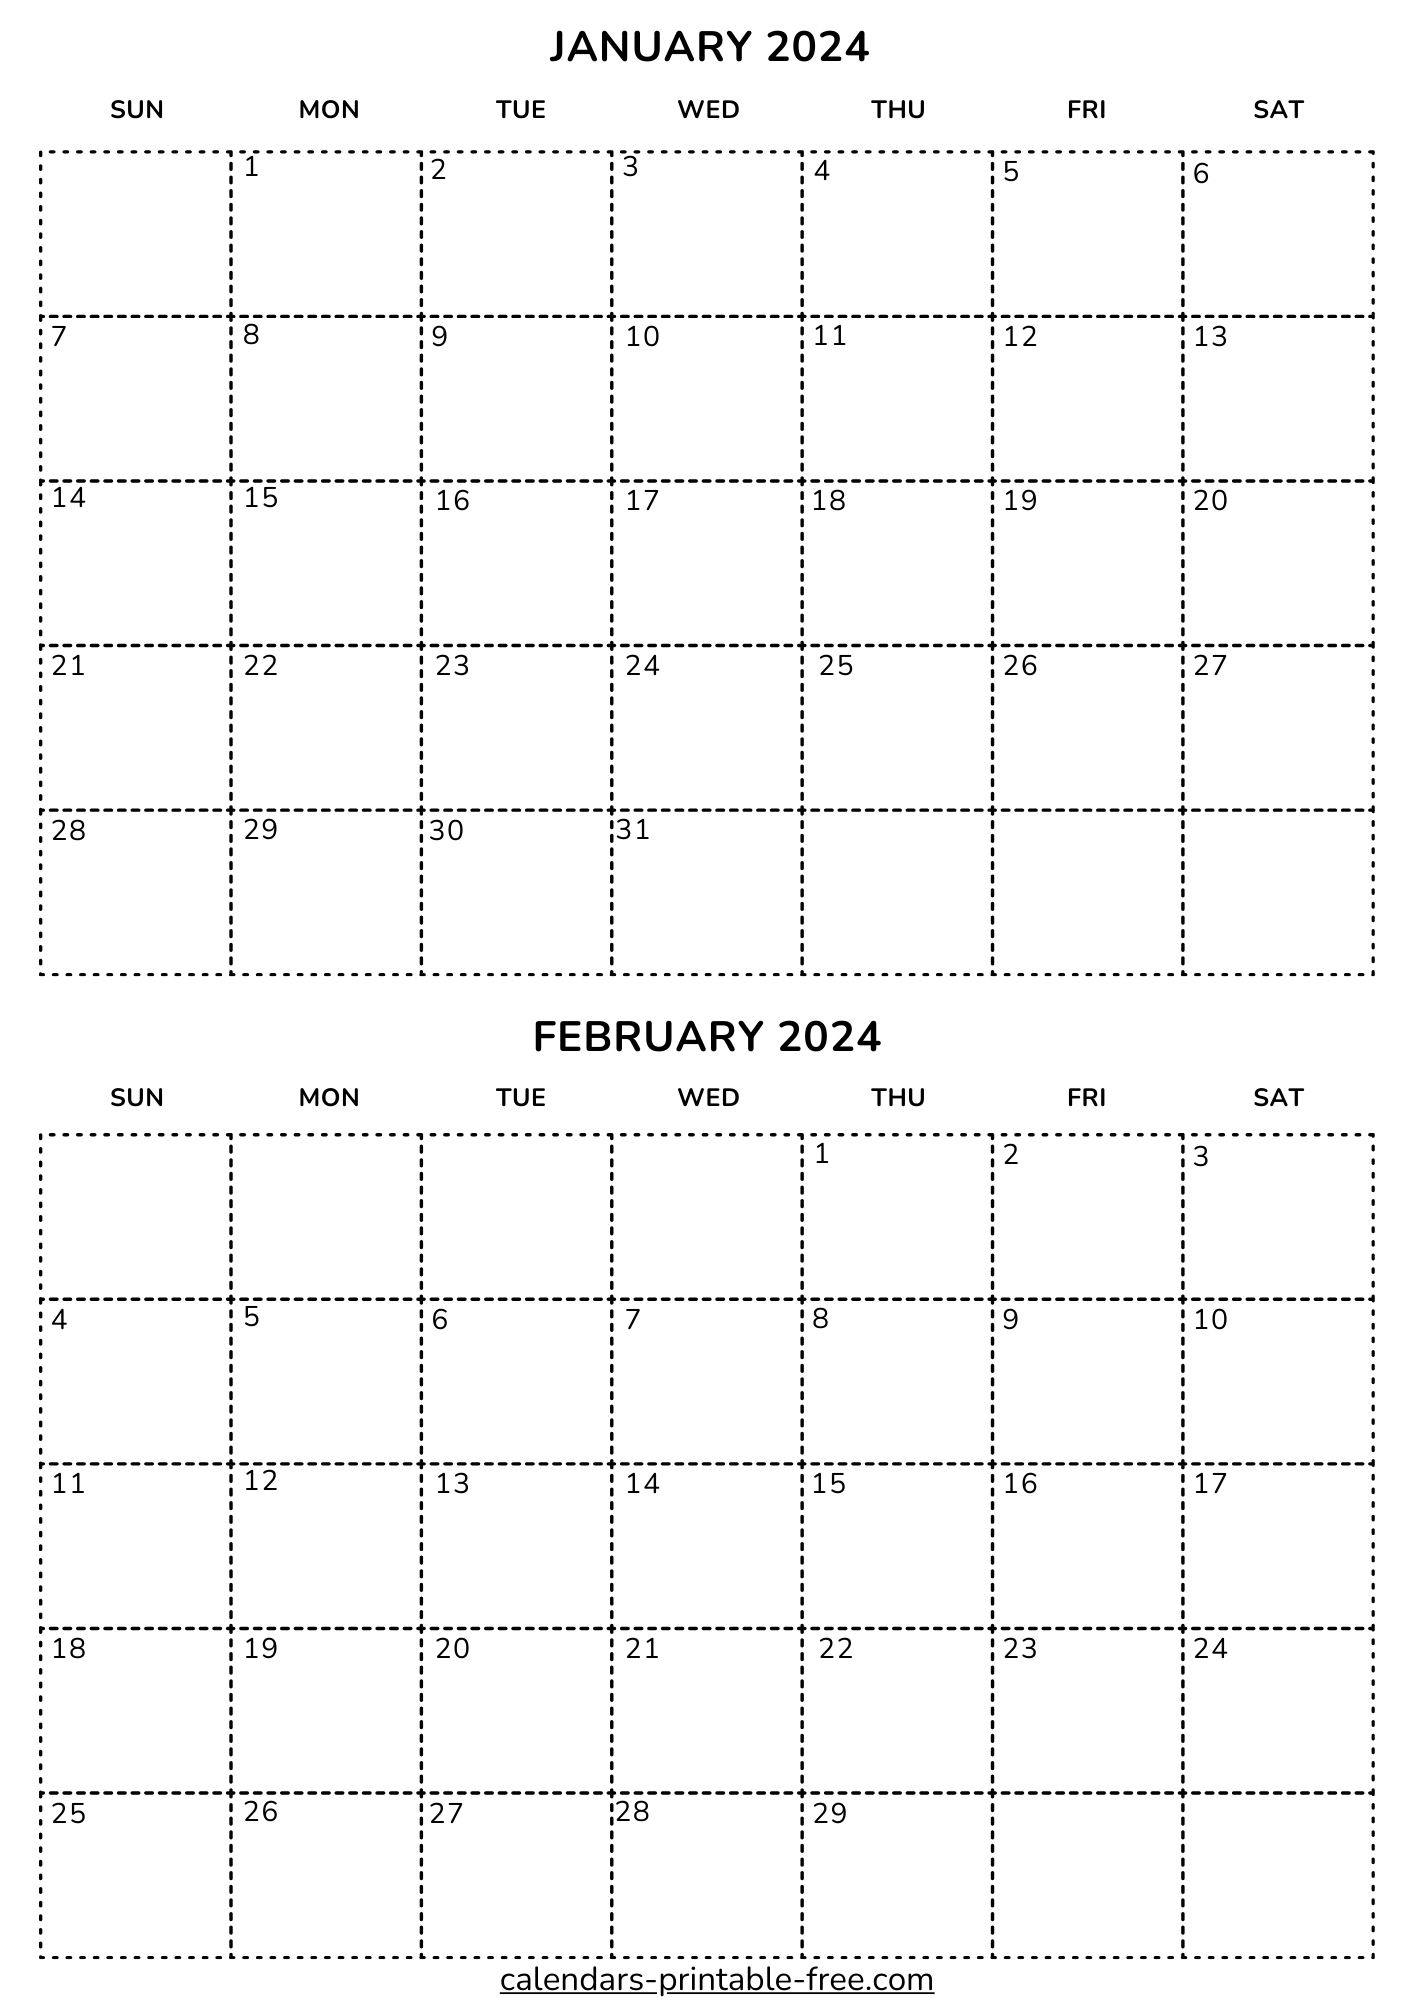 January and February 2024 Calendar Printable Free, image